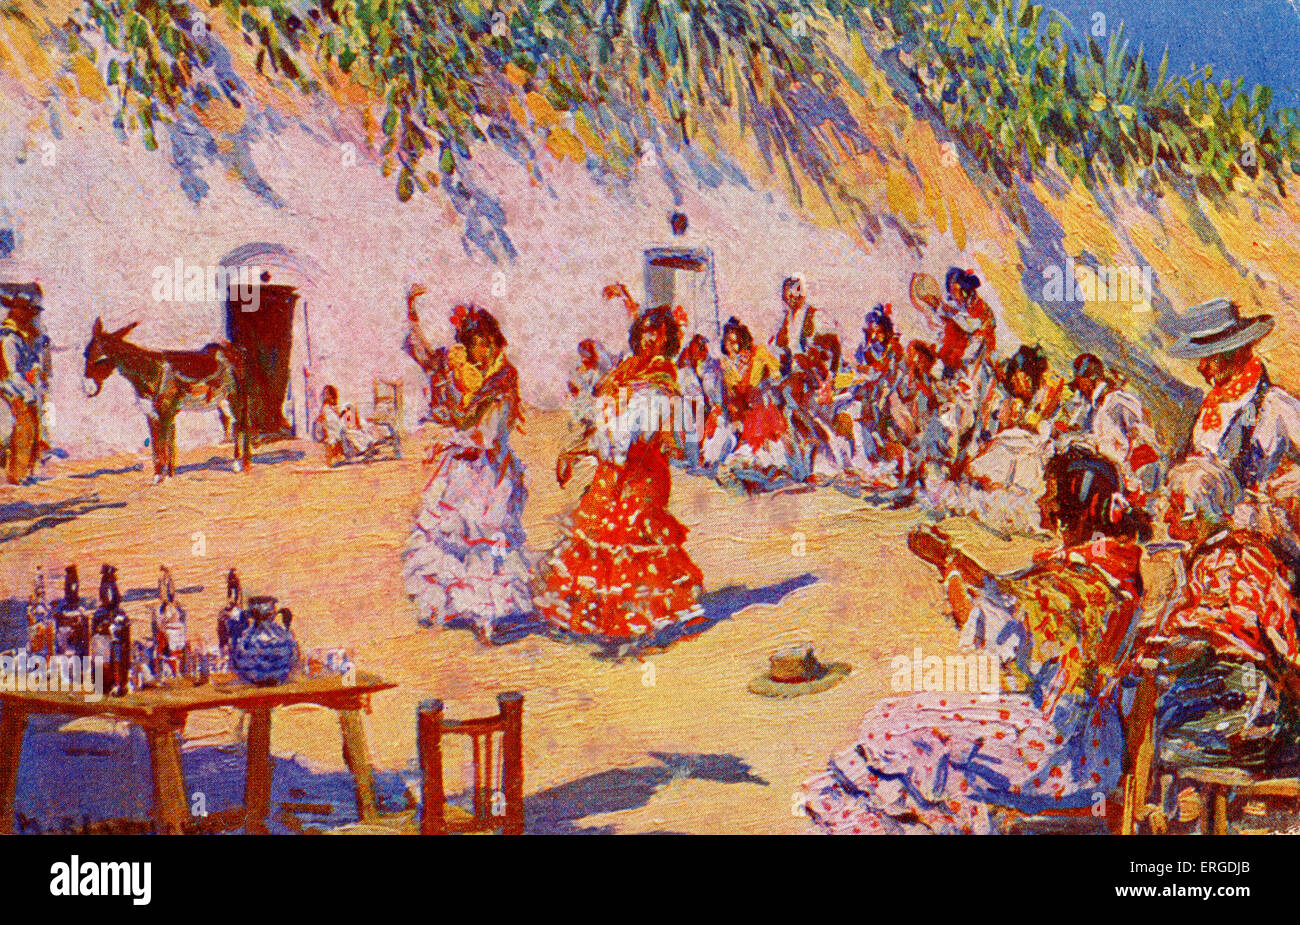 Zambra gitana (gypsy festivities). Shows gathering of Spanish gypsies to dance and play music. Illustration by Mariano Bertuchi, Spanish artist: 6 February 1884 - 20 June 1955. Stock Photo